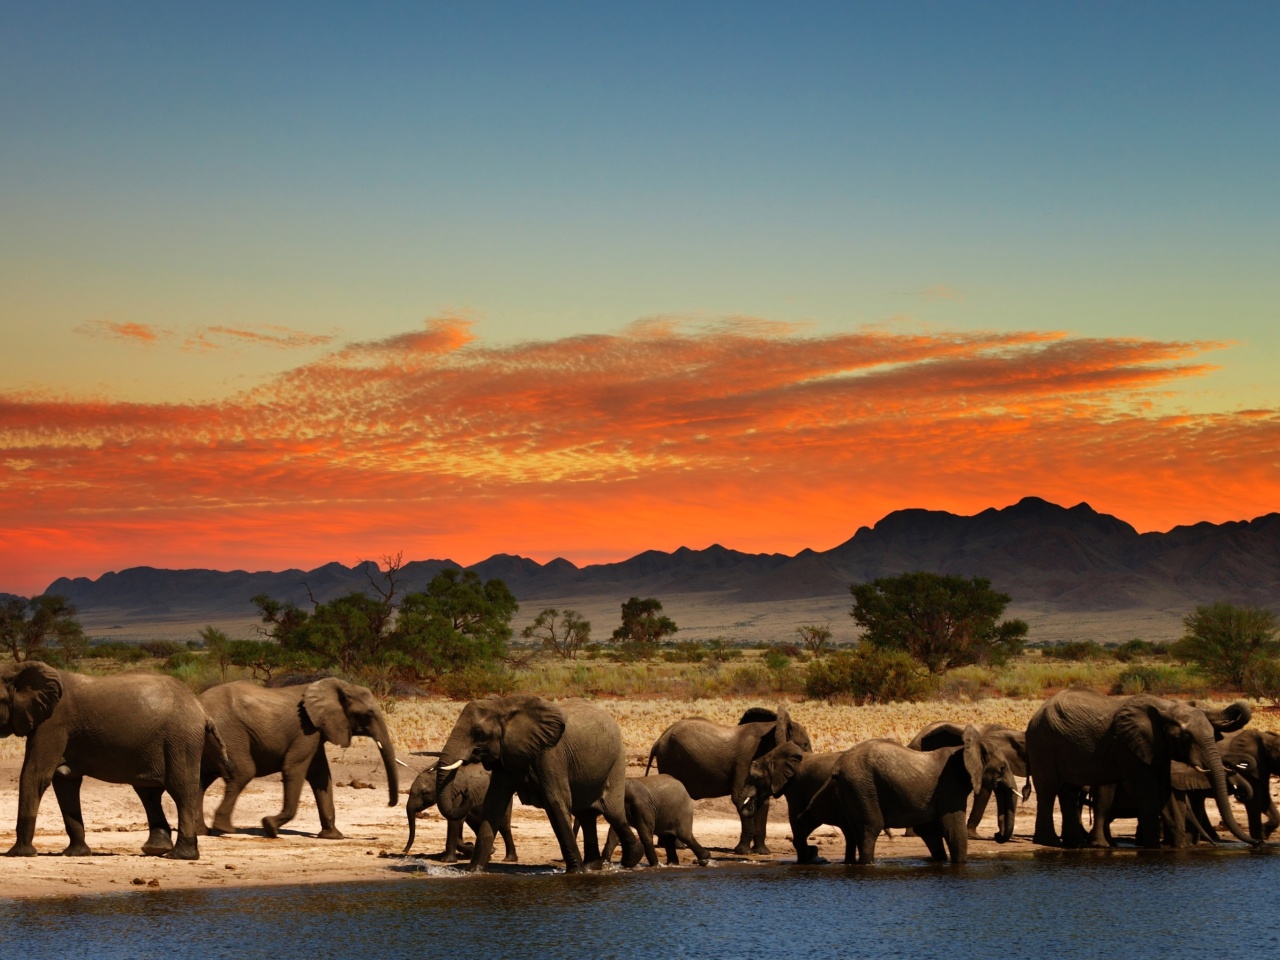 Das Herd of elephants Safari Wallpaper 1280x960